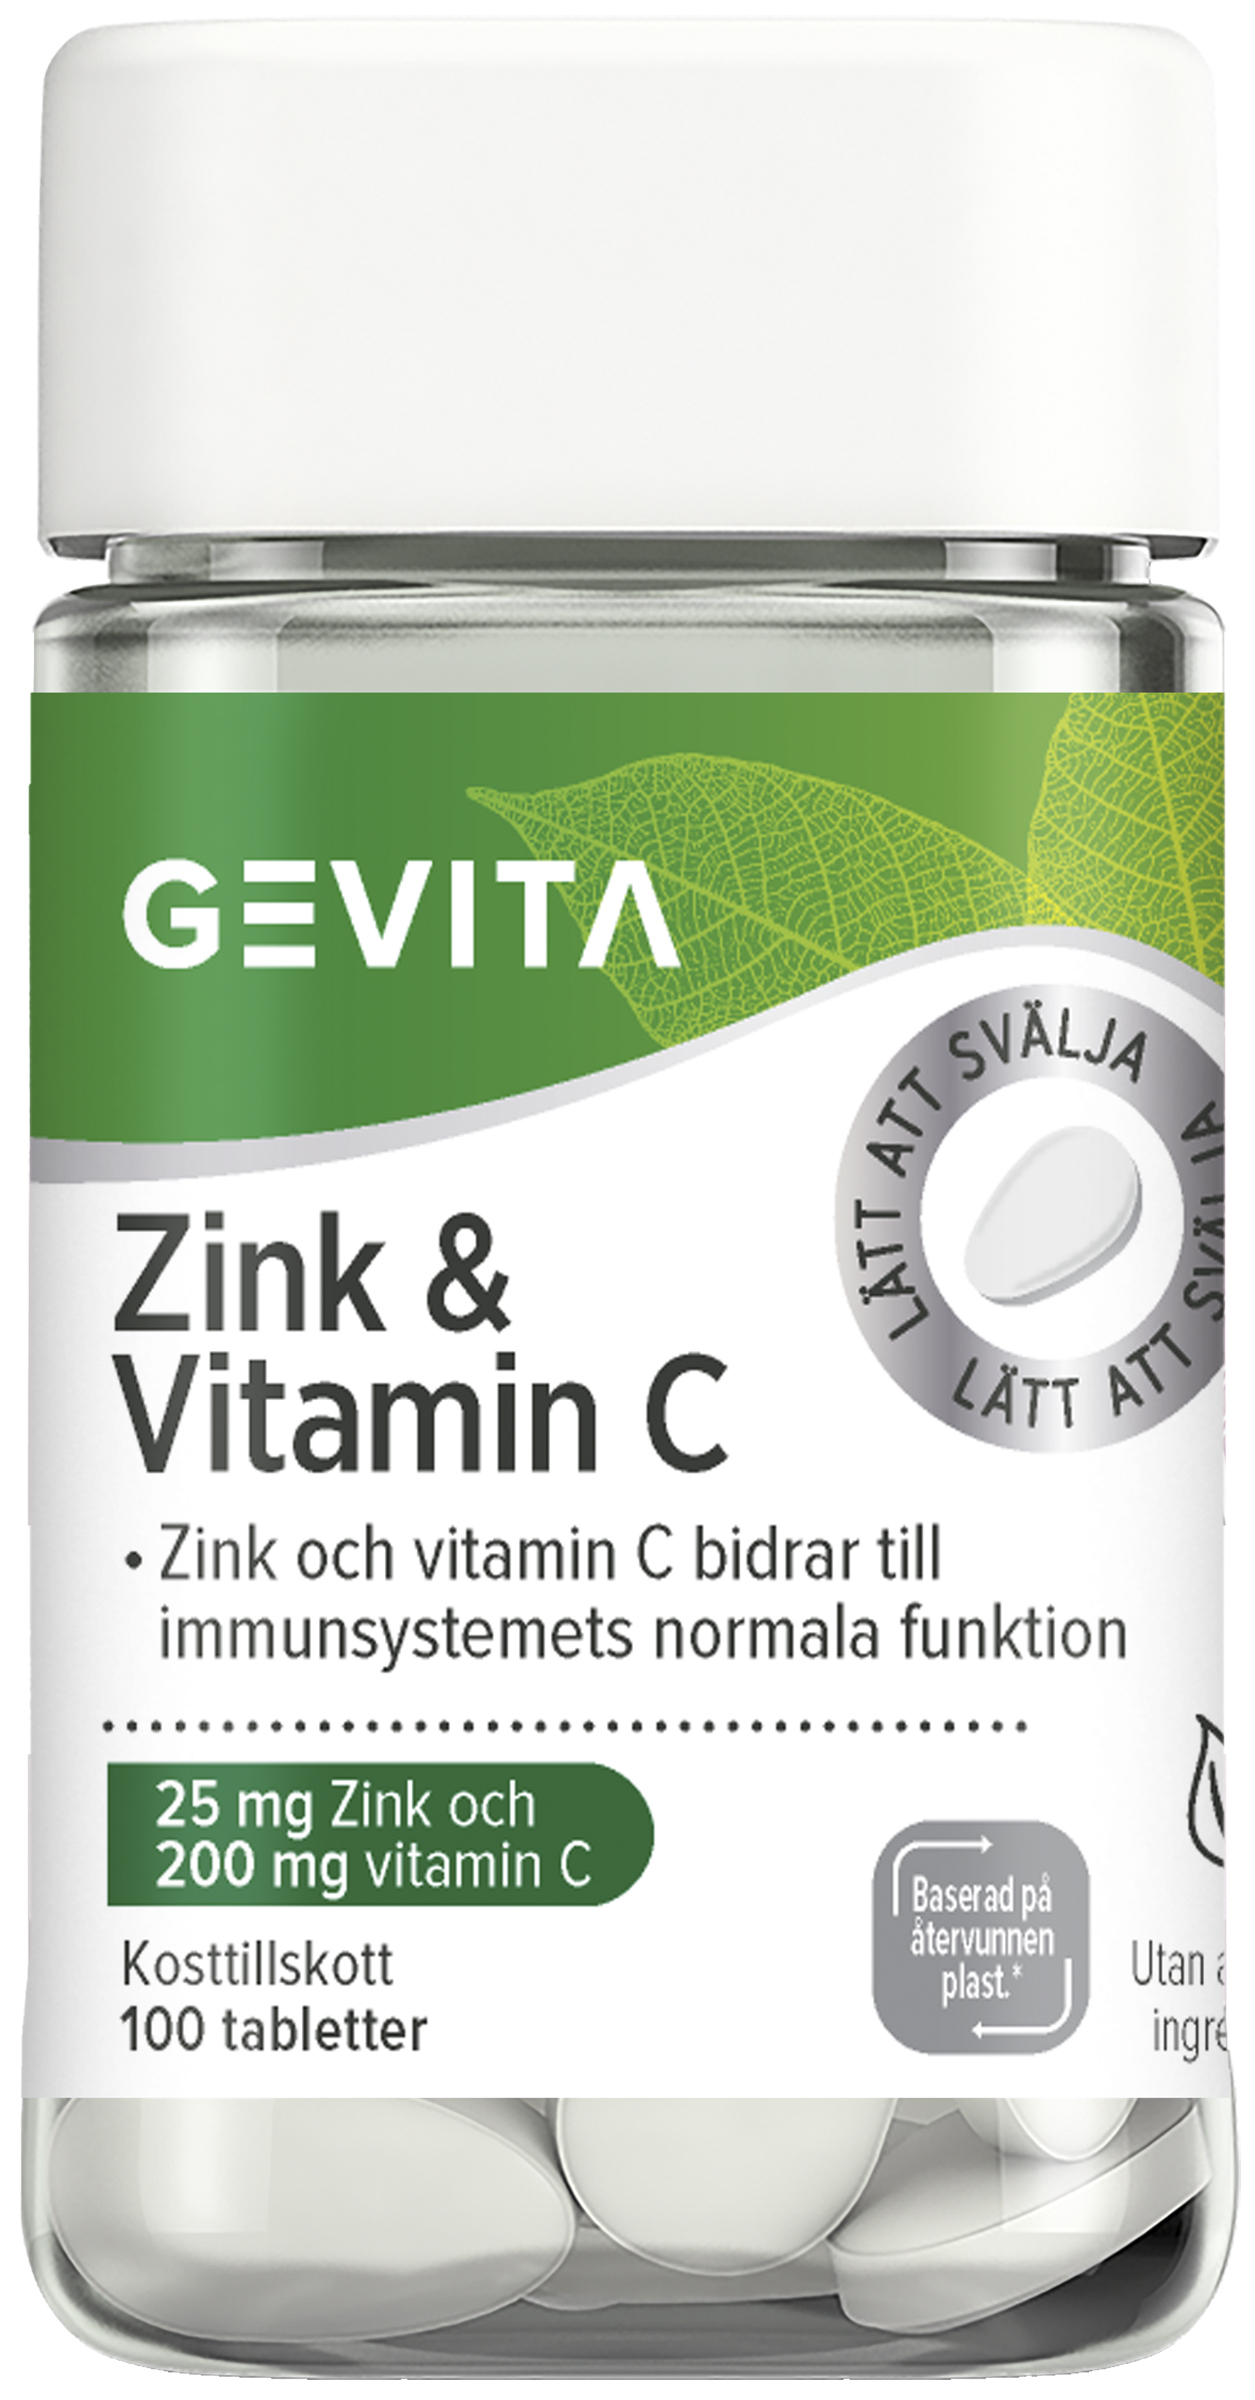 Gevita Zink & Vitamin C 100 st